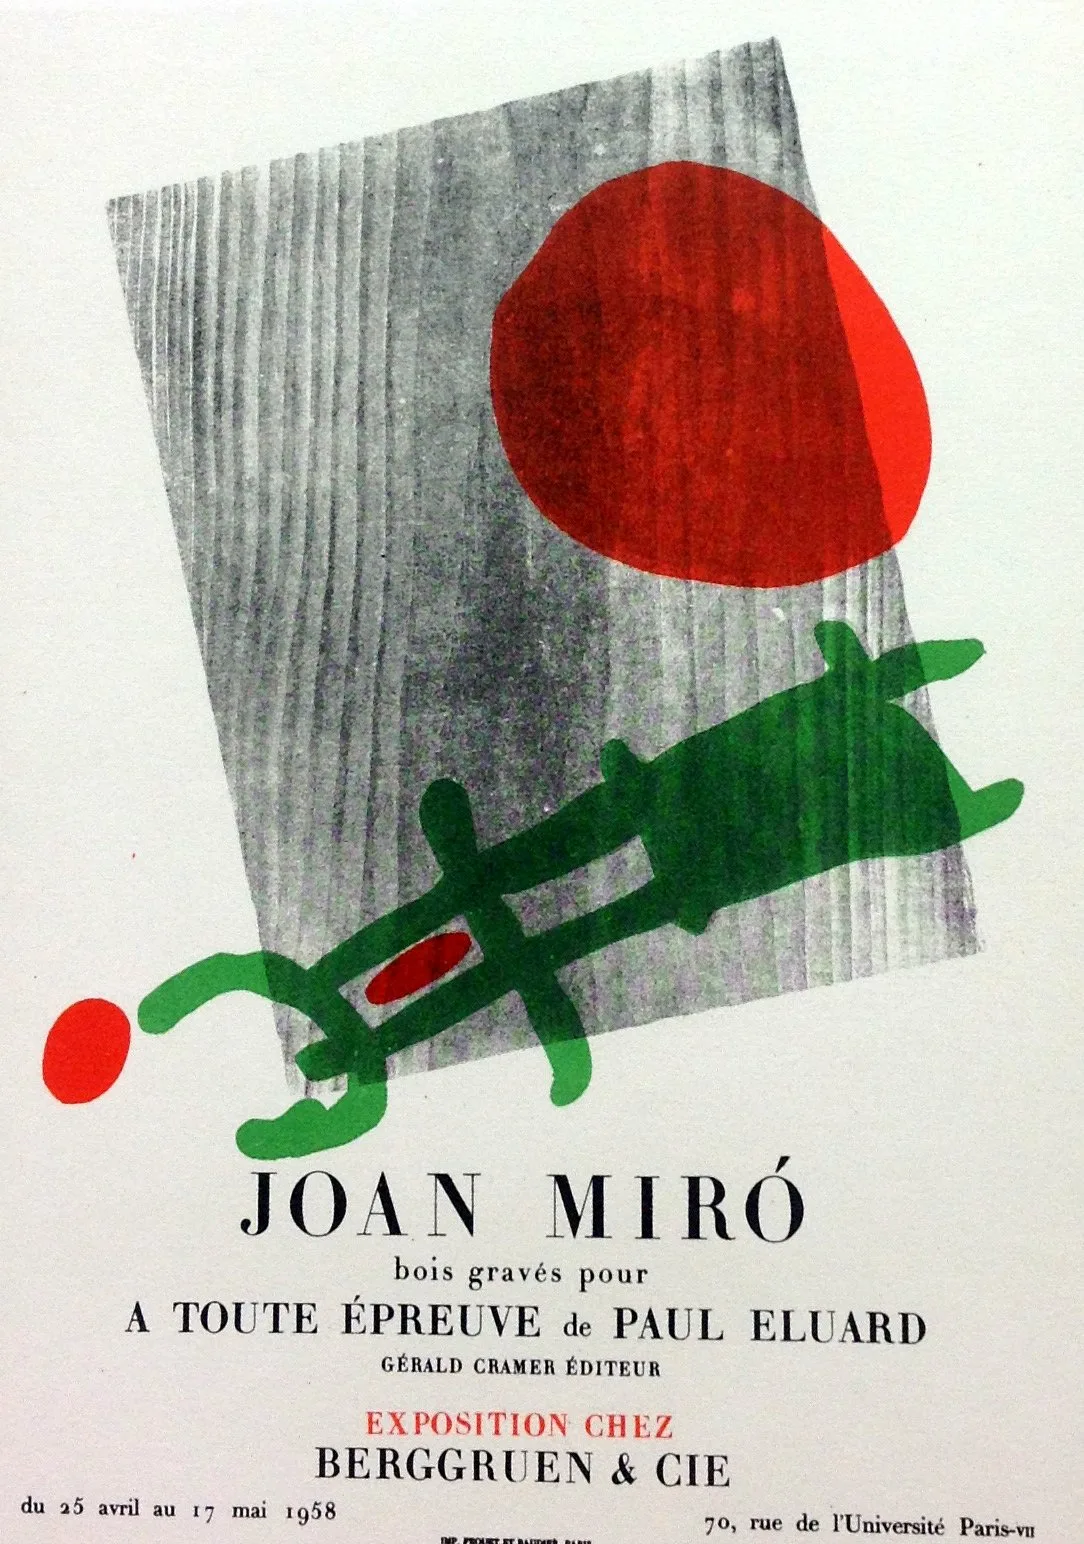 Miro 55 "A toute epreuve" printed 1959 Mourlot, Art in posters